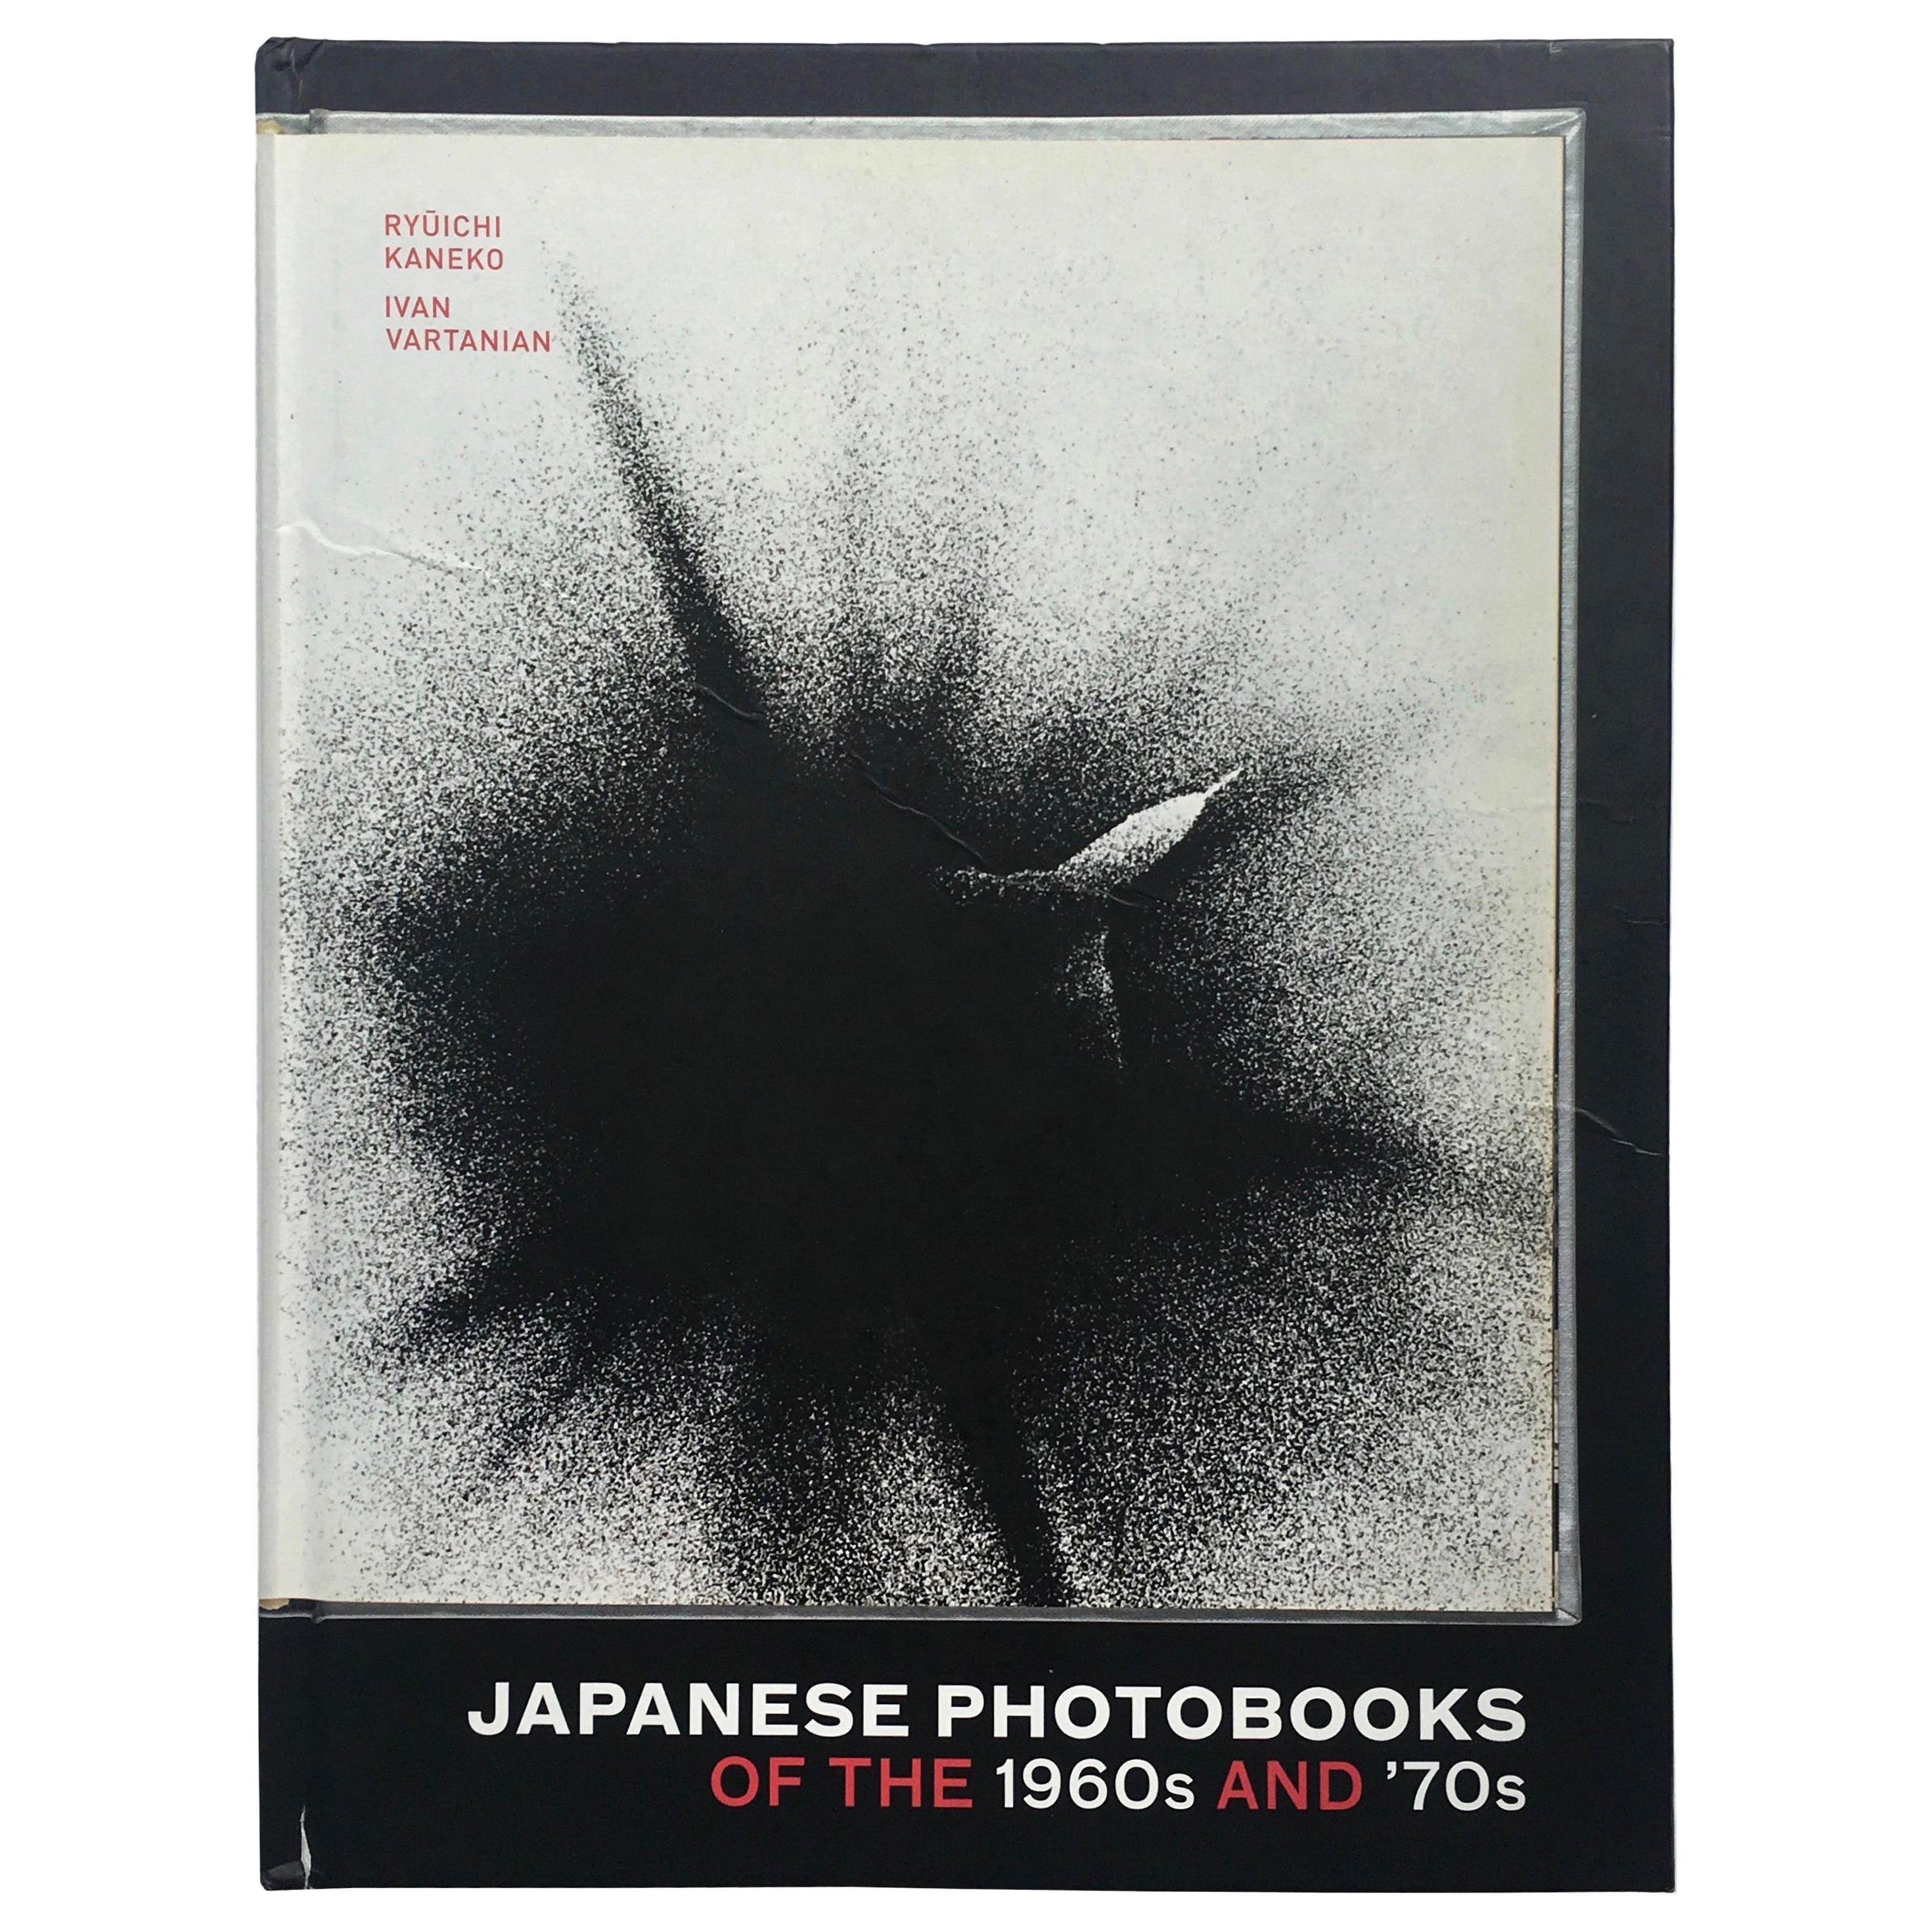 Japanese Photobooks of the 1960s and '70s -R. Kaneko, I. Vartanian- 1st Ed, 2009 For Sale